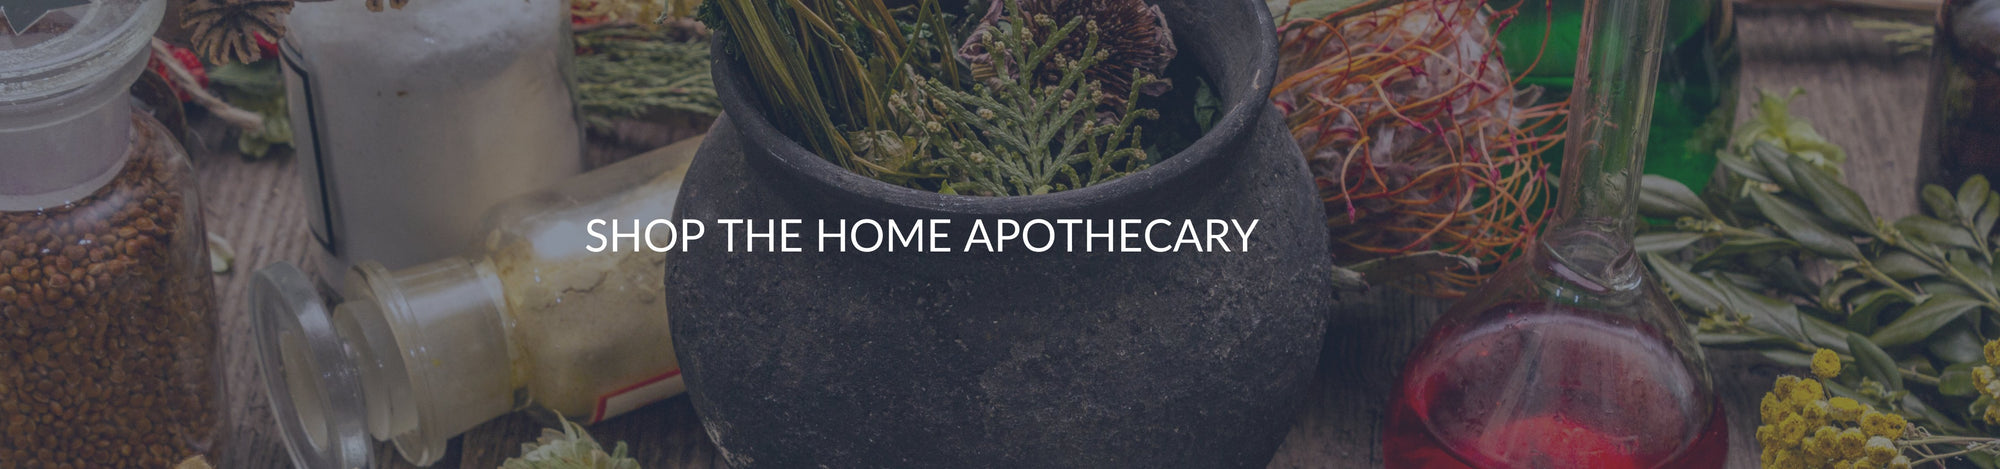 The Home Apothecary